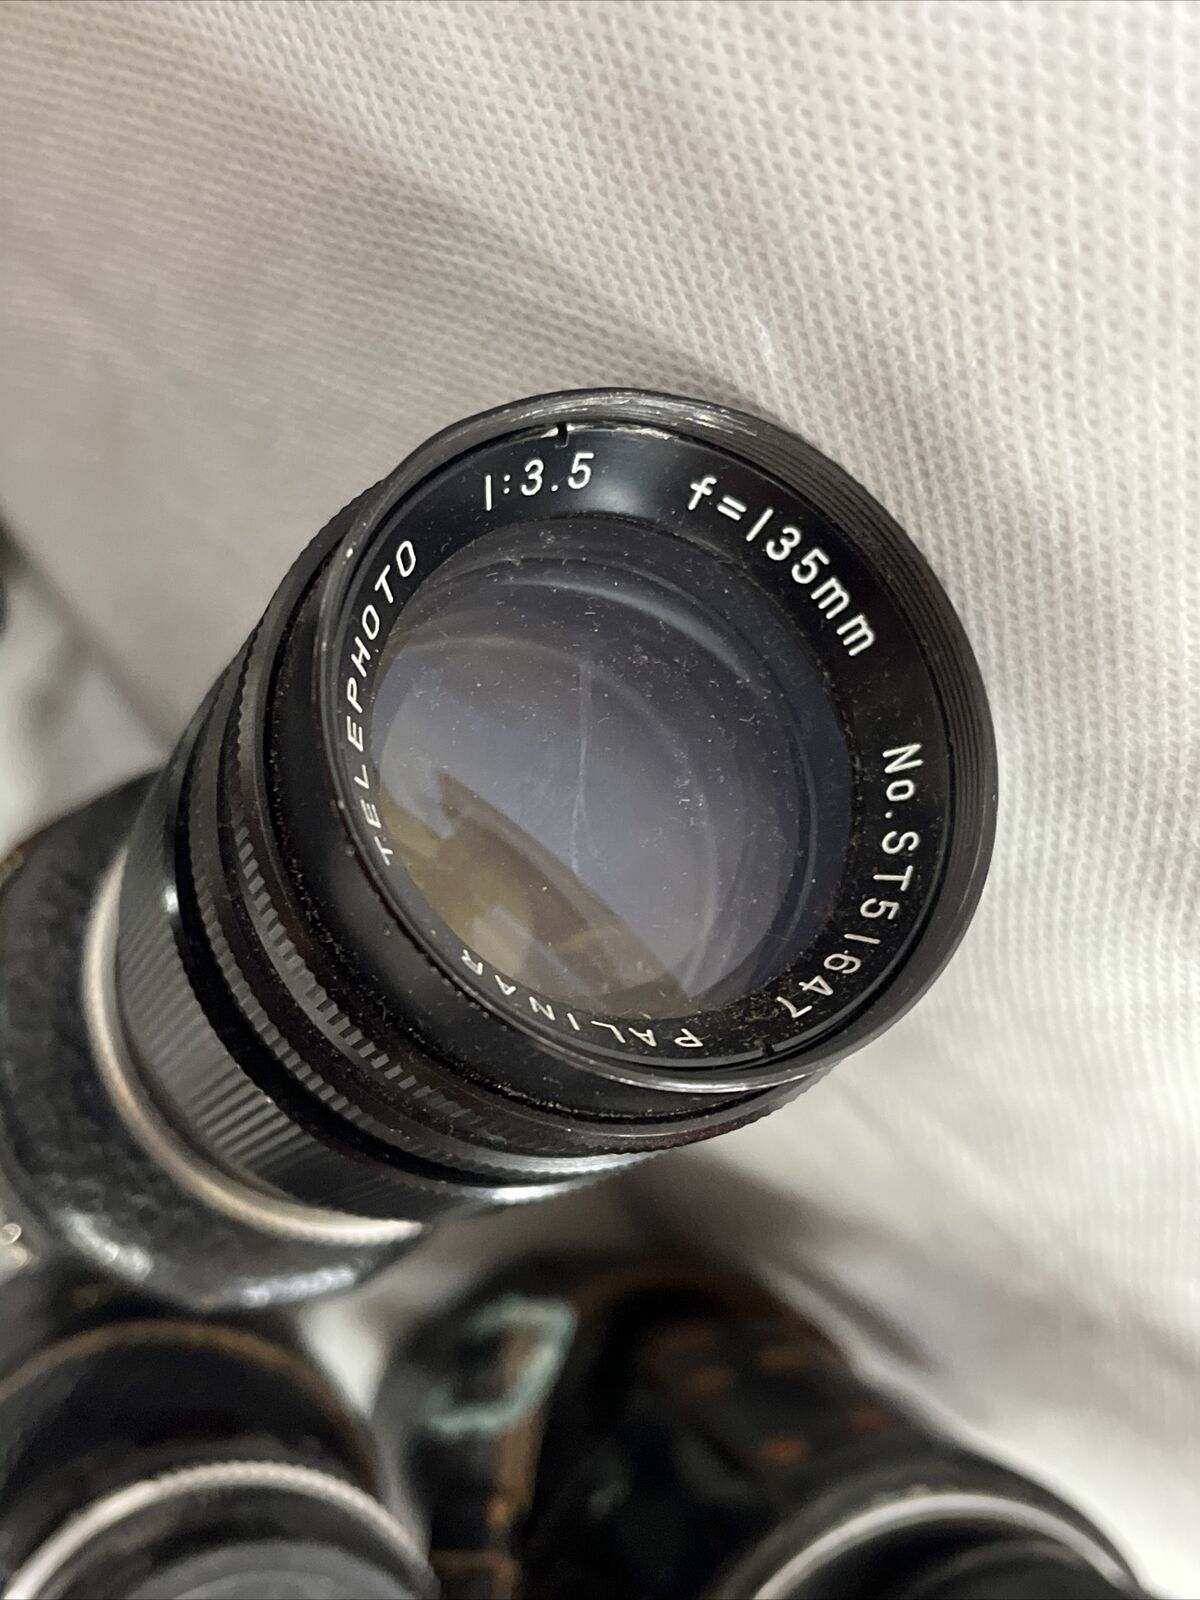 Vintage Camera zoom lenses